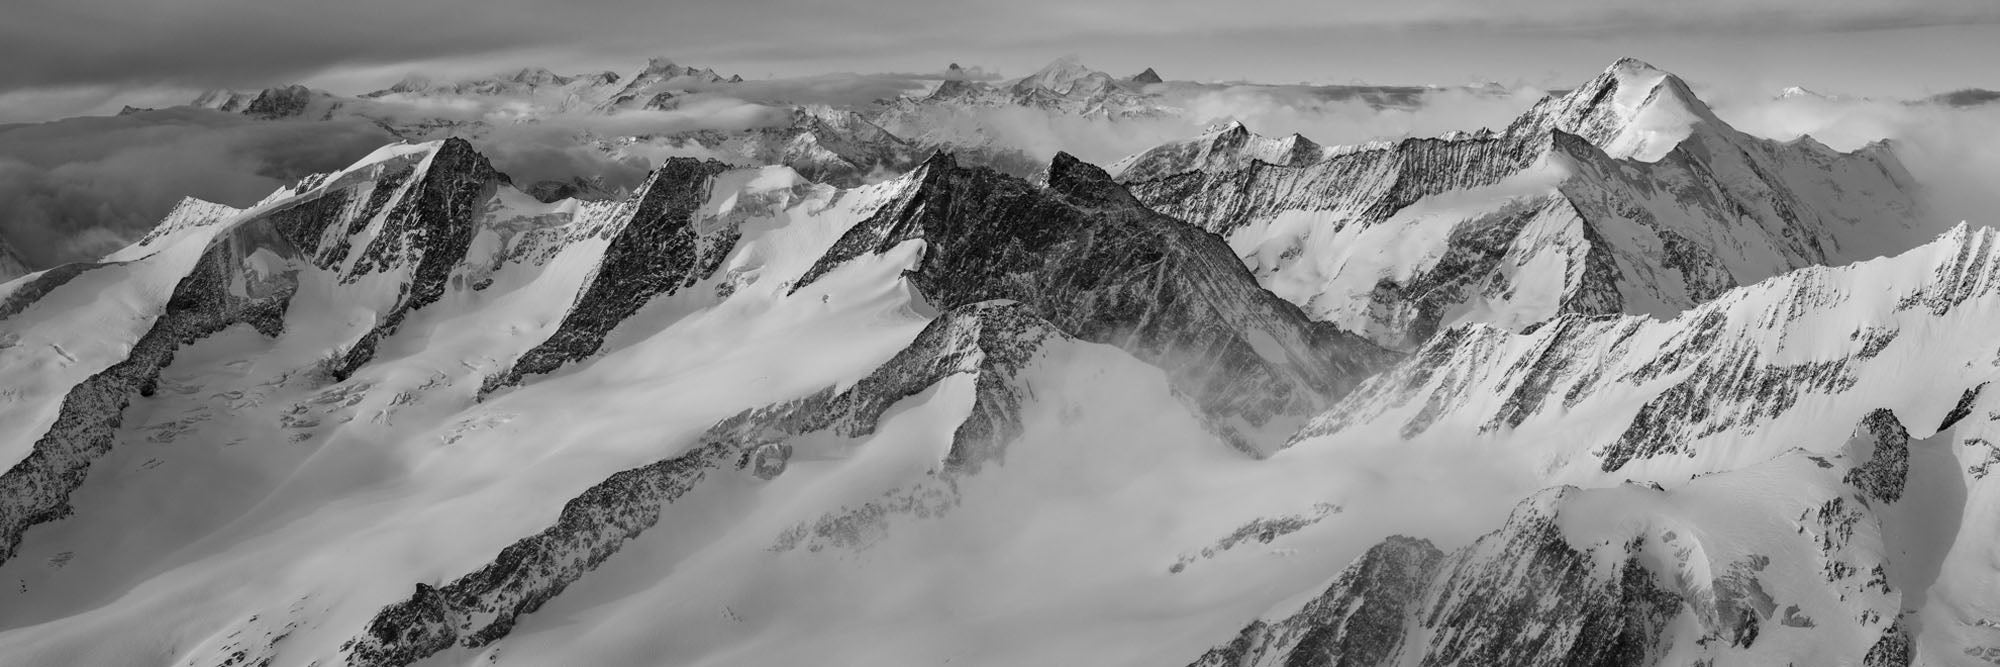 Bernese Alps e Valaisannes, Panorama, Switzerland - Petra Gut Contemporary AG Thomas Crauwels